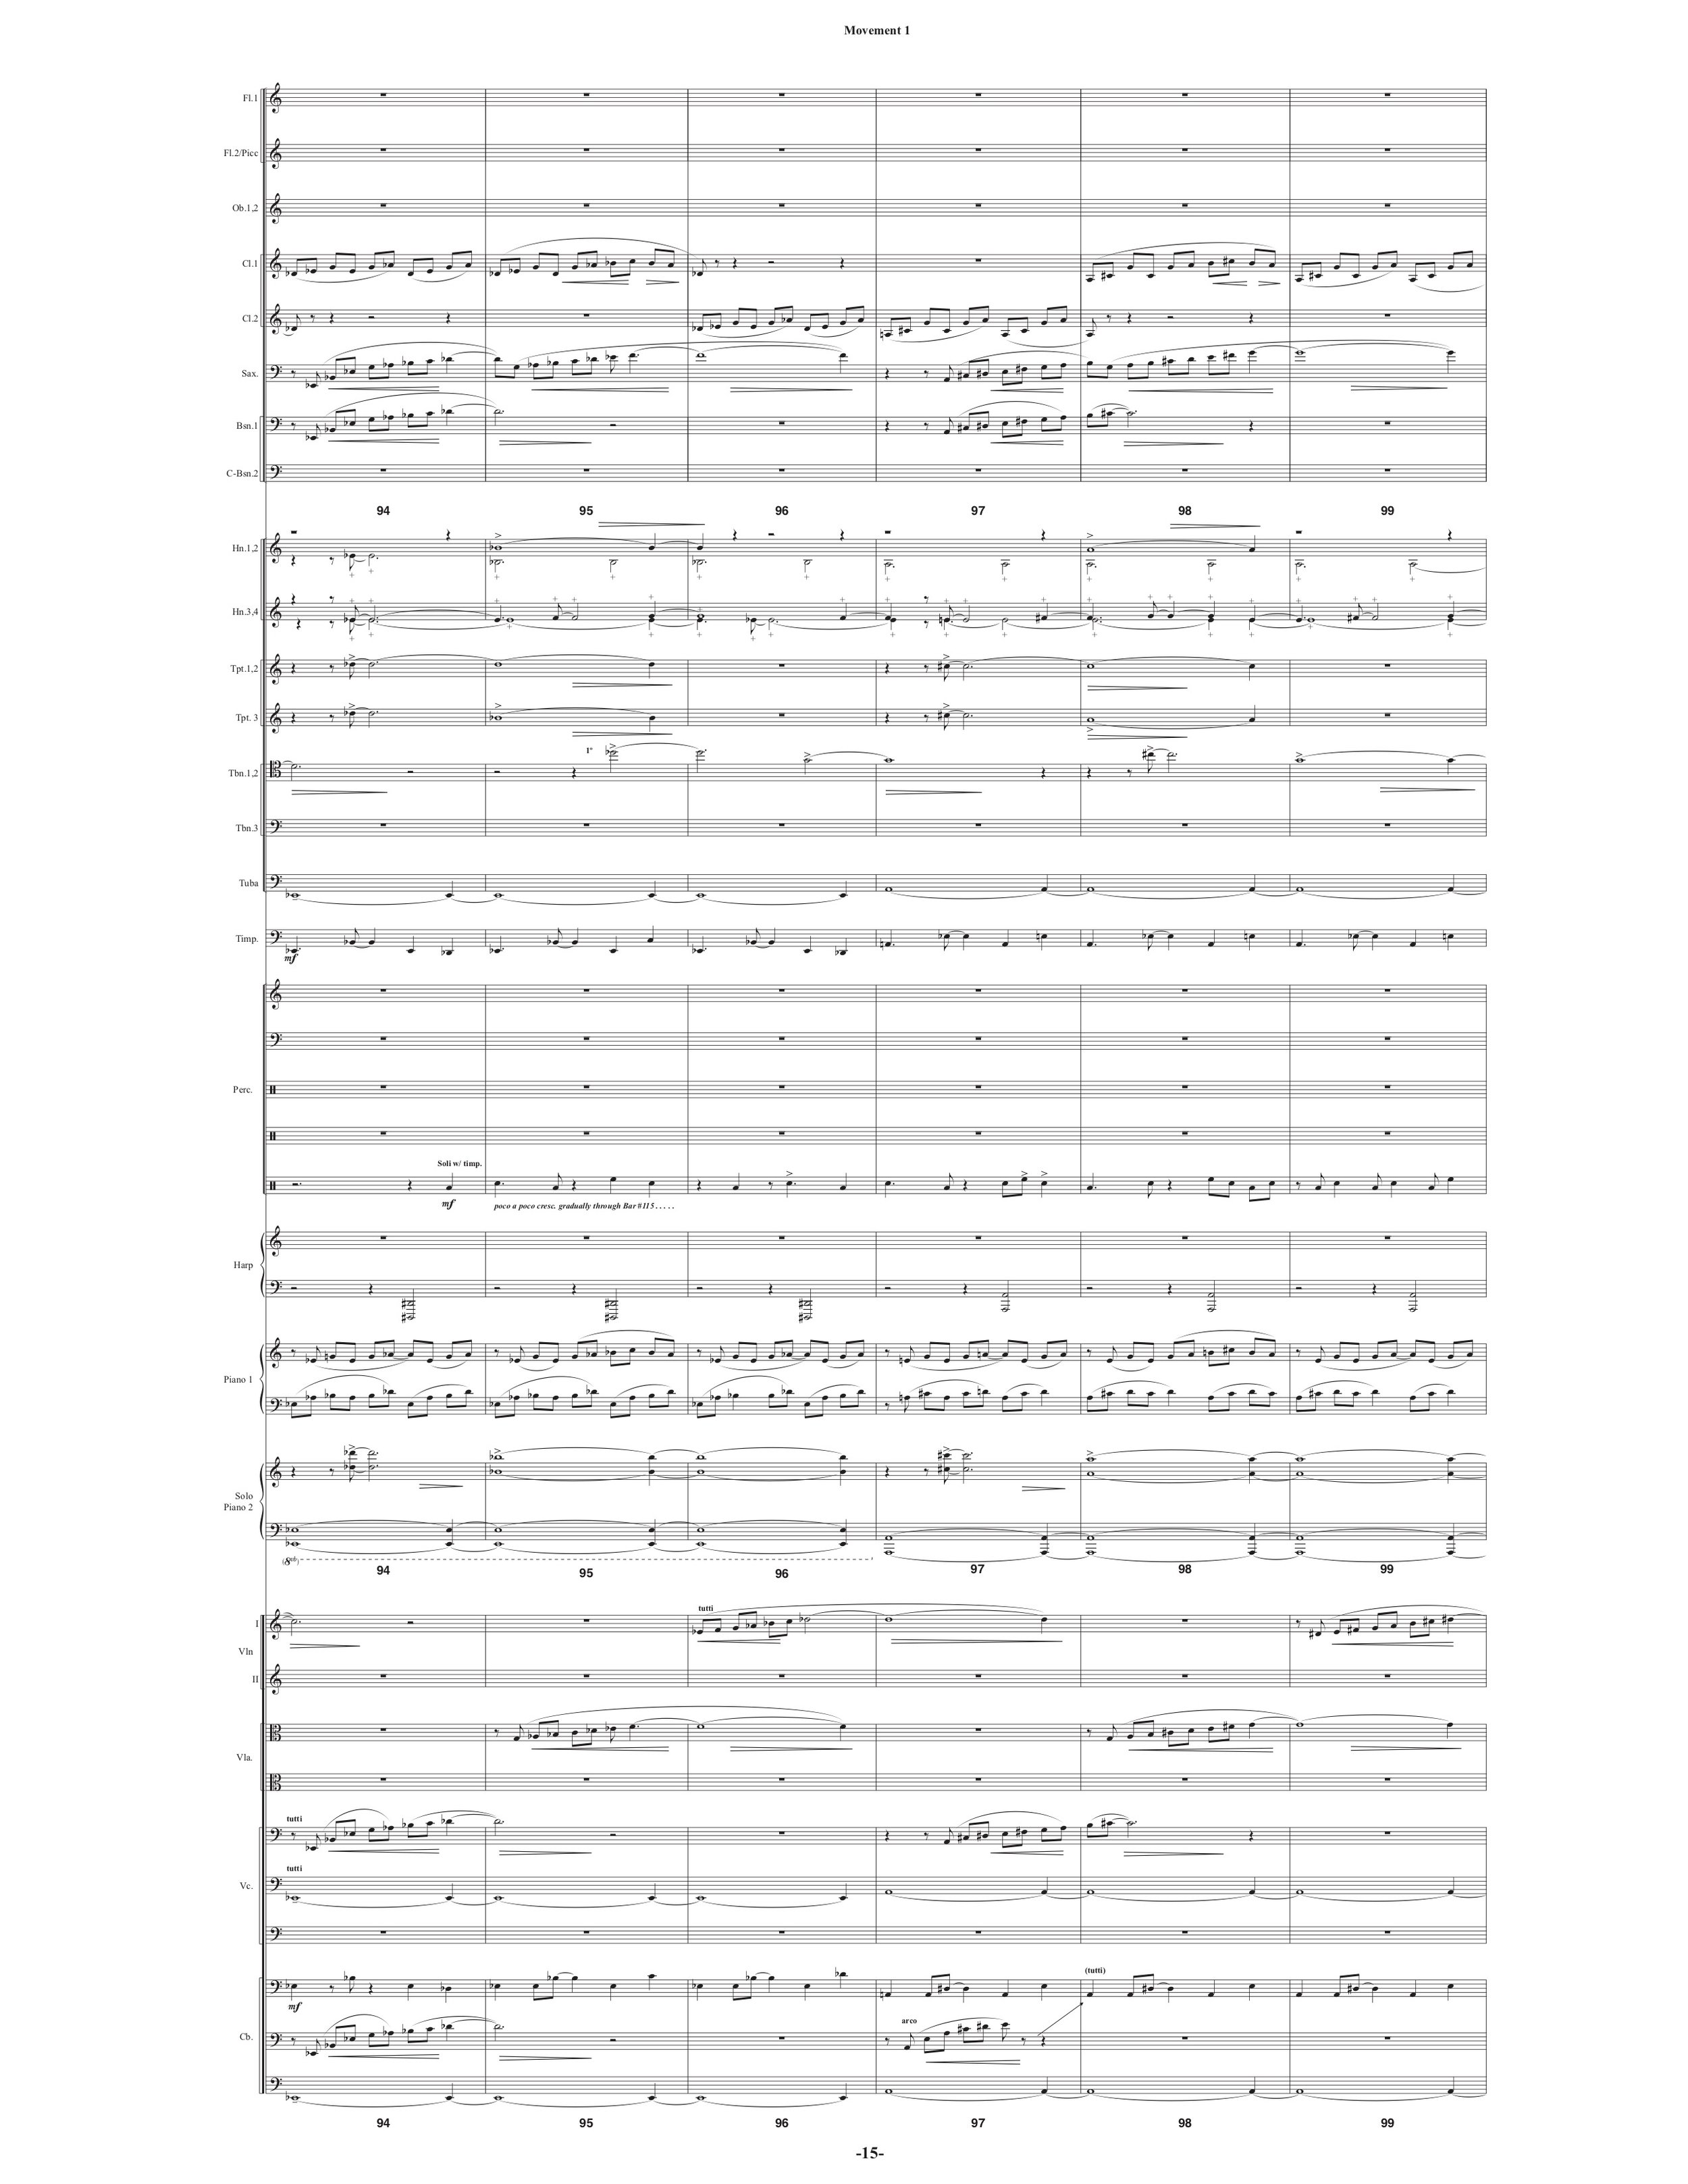 Symphony_Orch & 2 Pianos p20.jpg